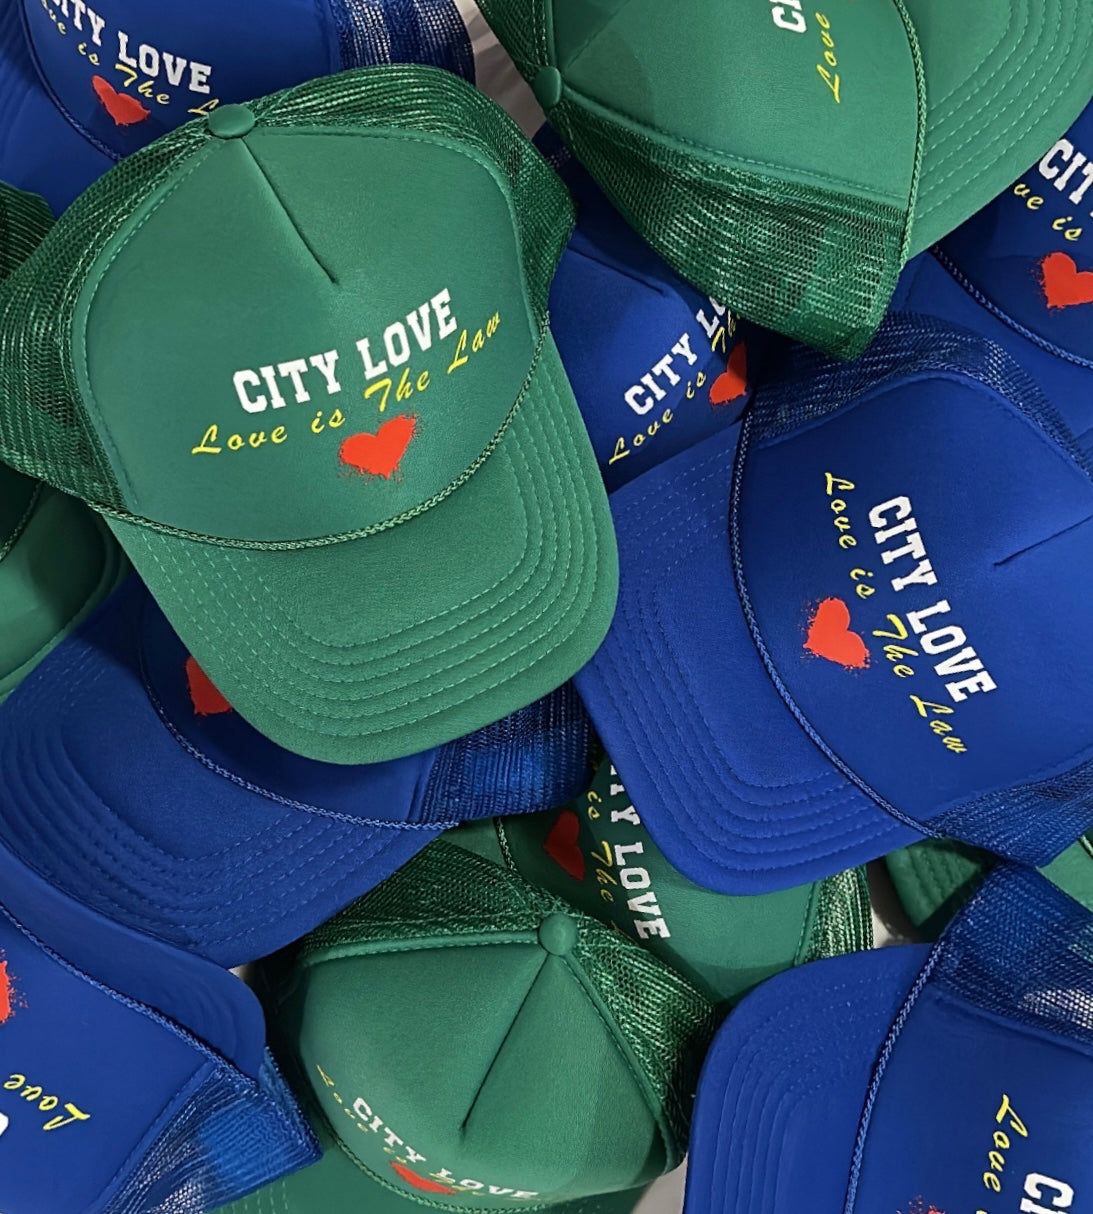 City Love Red Heart Trucker